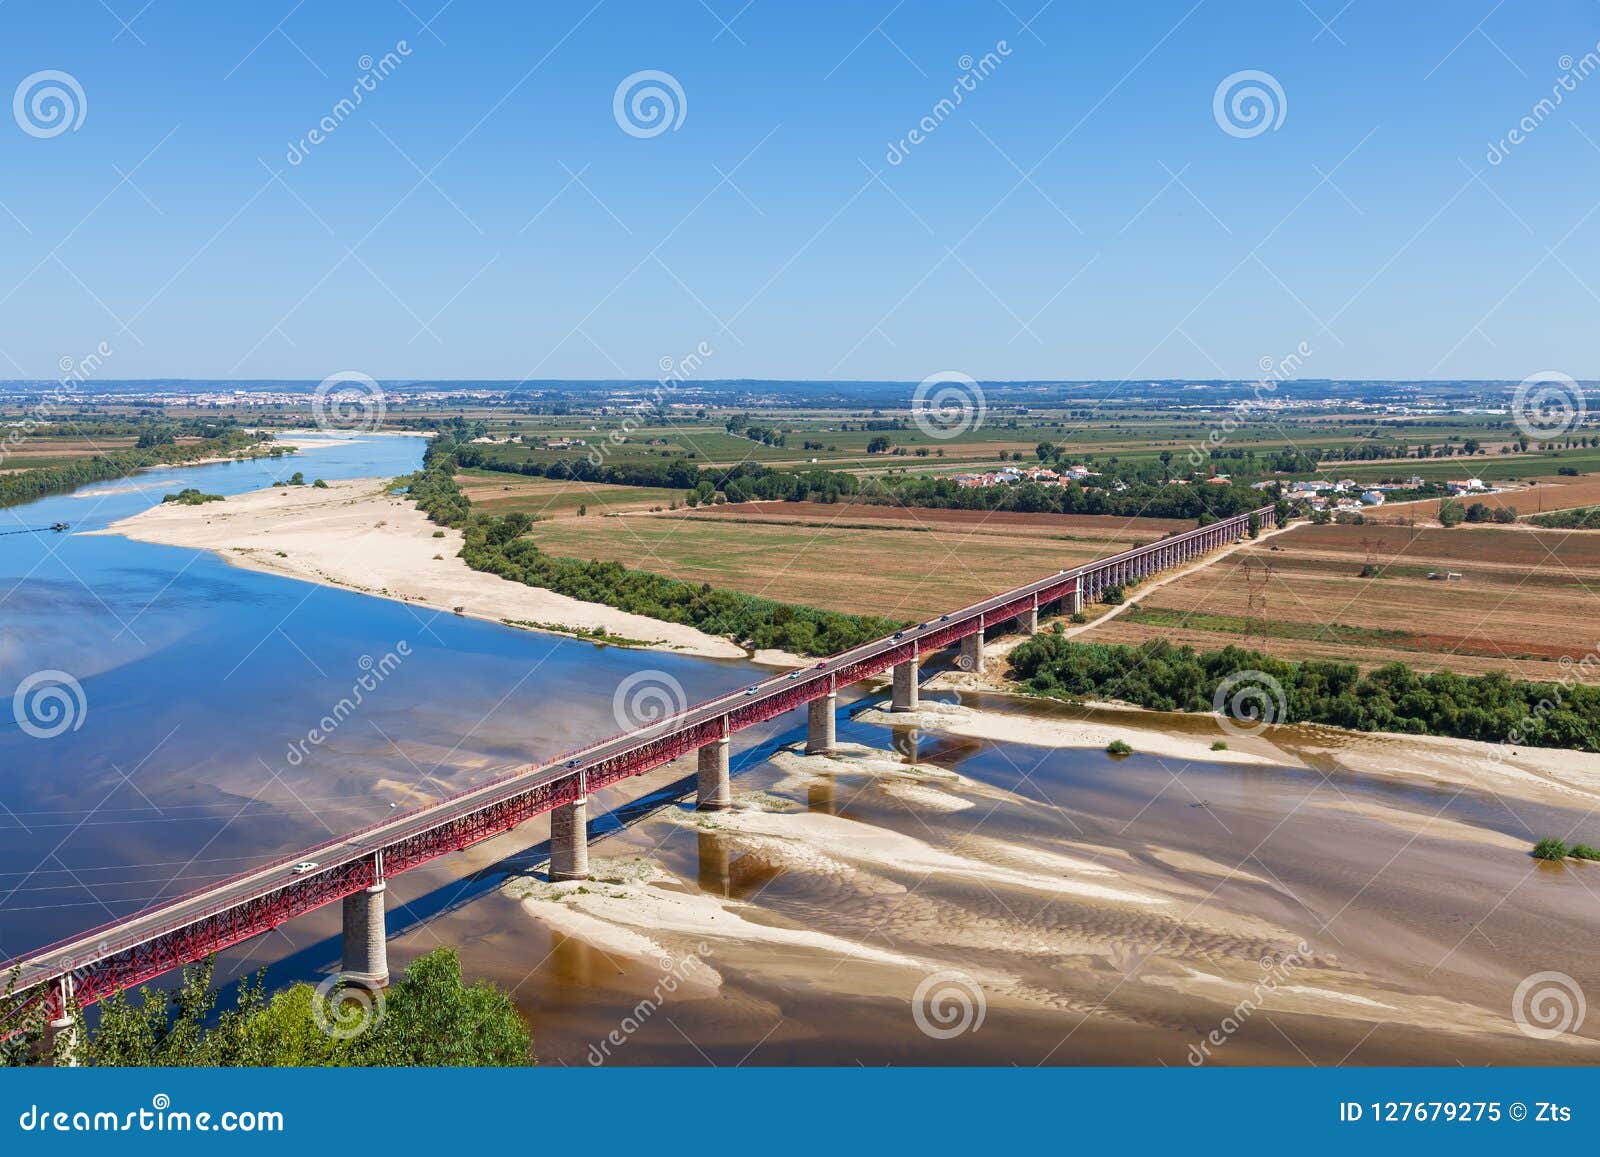 santarem, portugal. ponte dom luis i bridge, tagus river and leziria fields